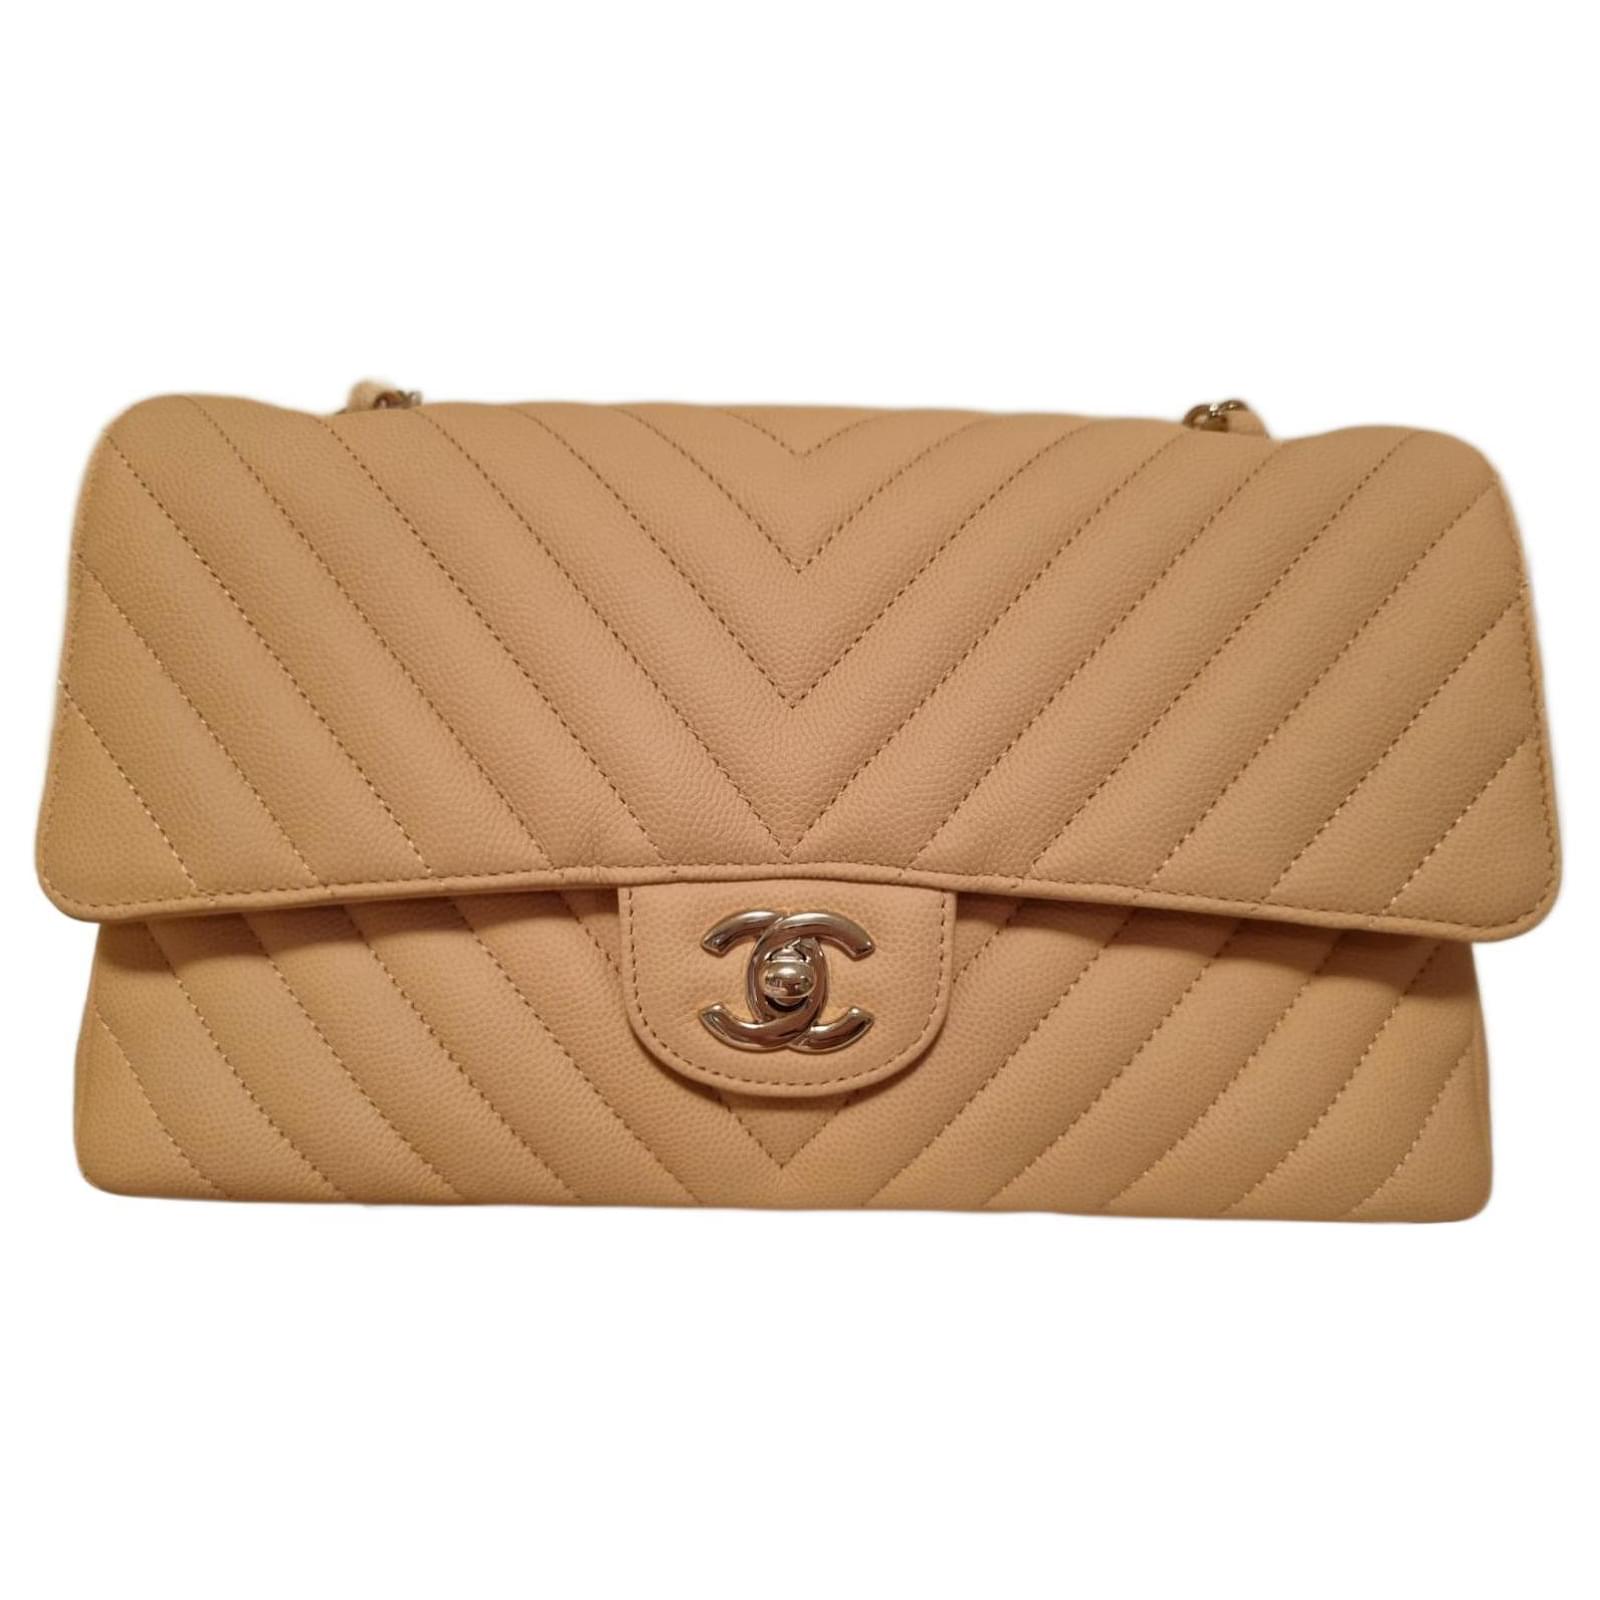 Chanel Chevron Classic Flap Handbag